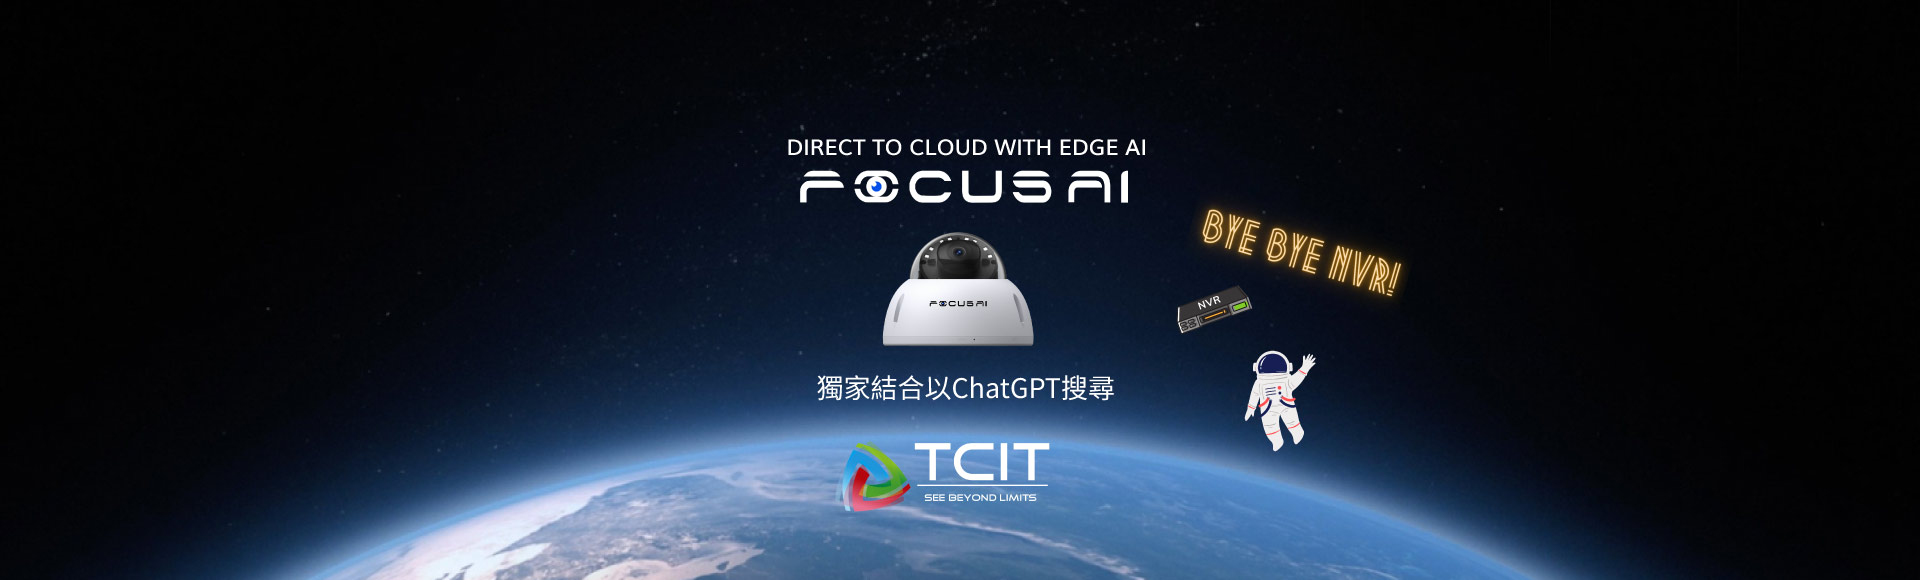 TCIT-FocusAI AI camera